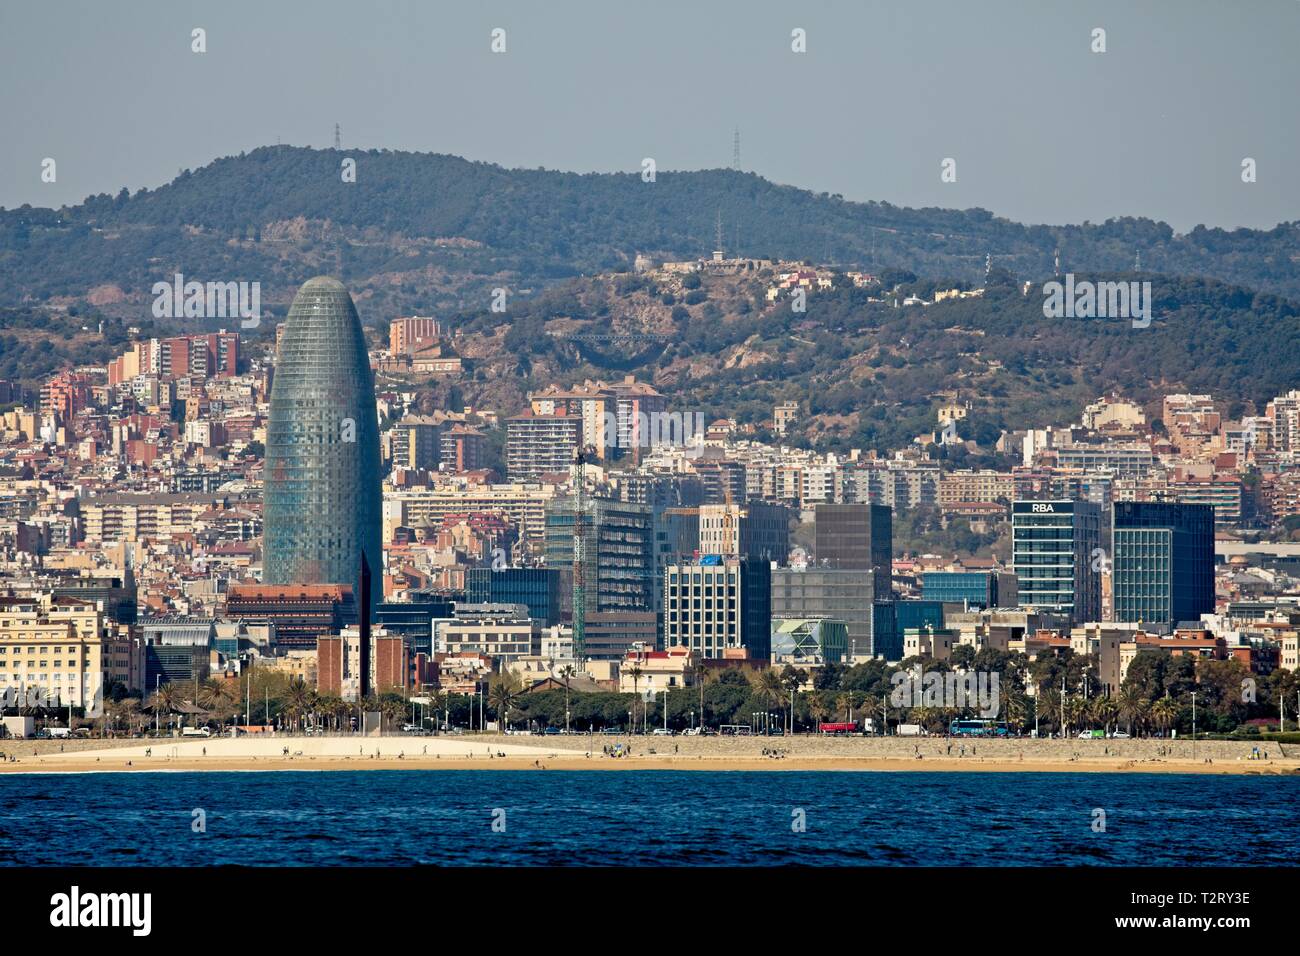 Barcelona skyline from the sea Stock Photo